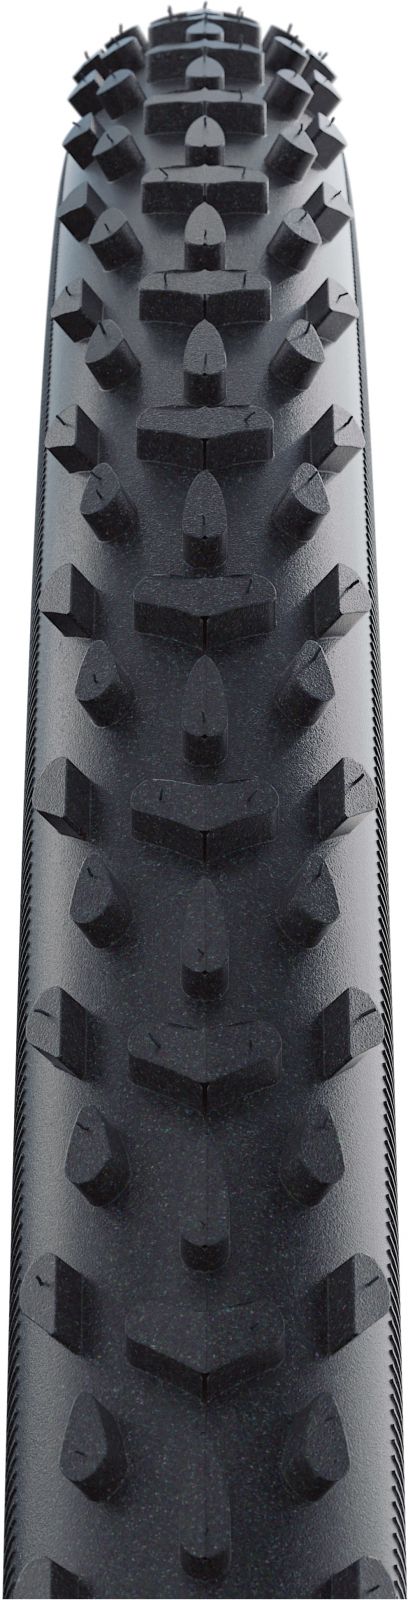 SCHWALBE plášť CX PRO, 30-622, 28 x 1.20, Performance, Dual, 400 g, černá